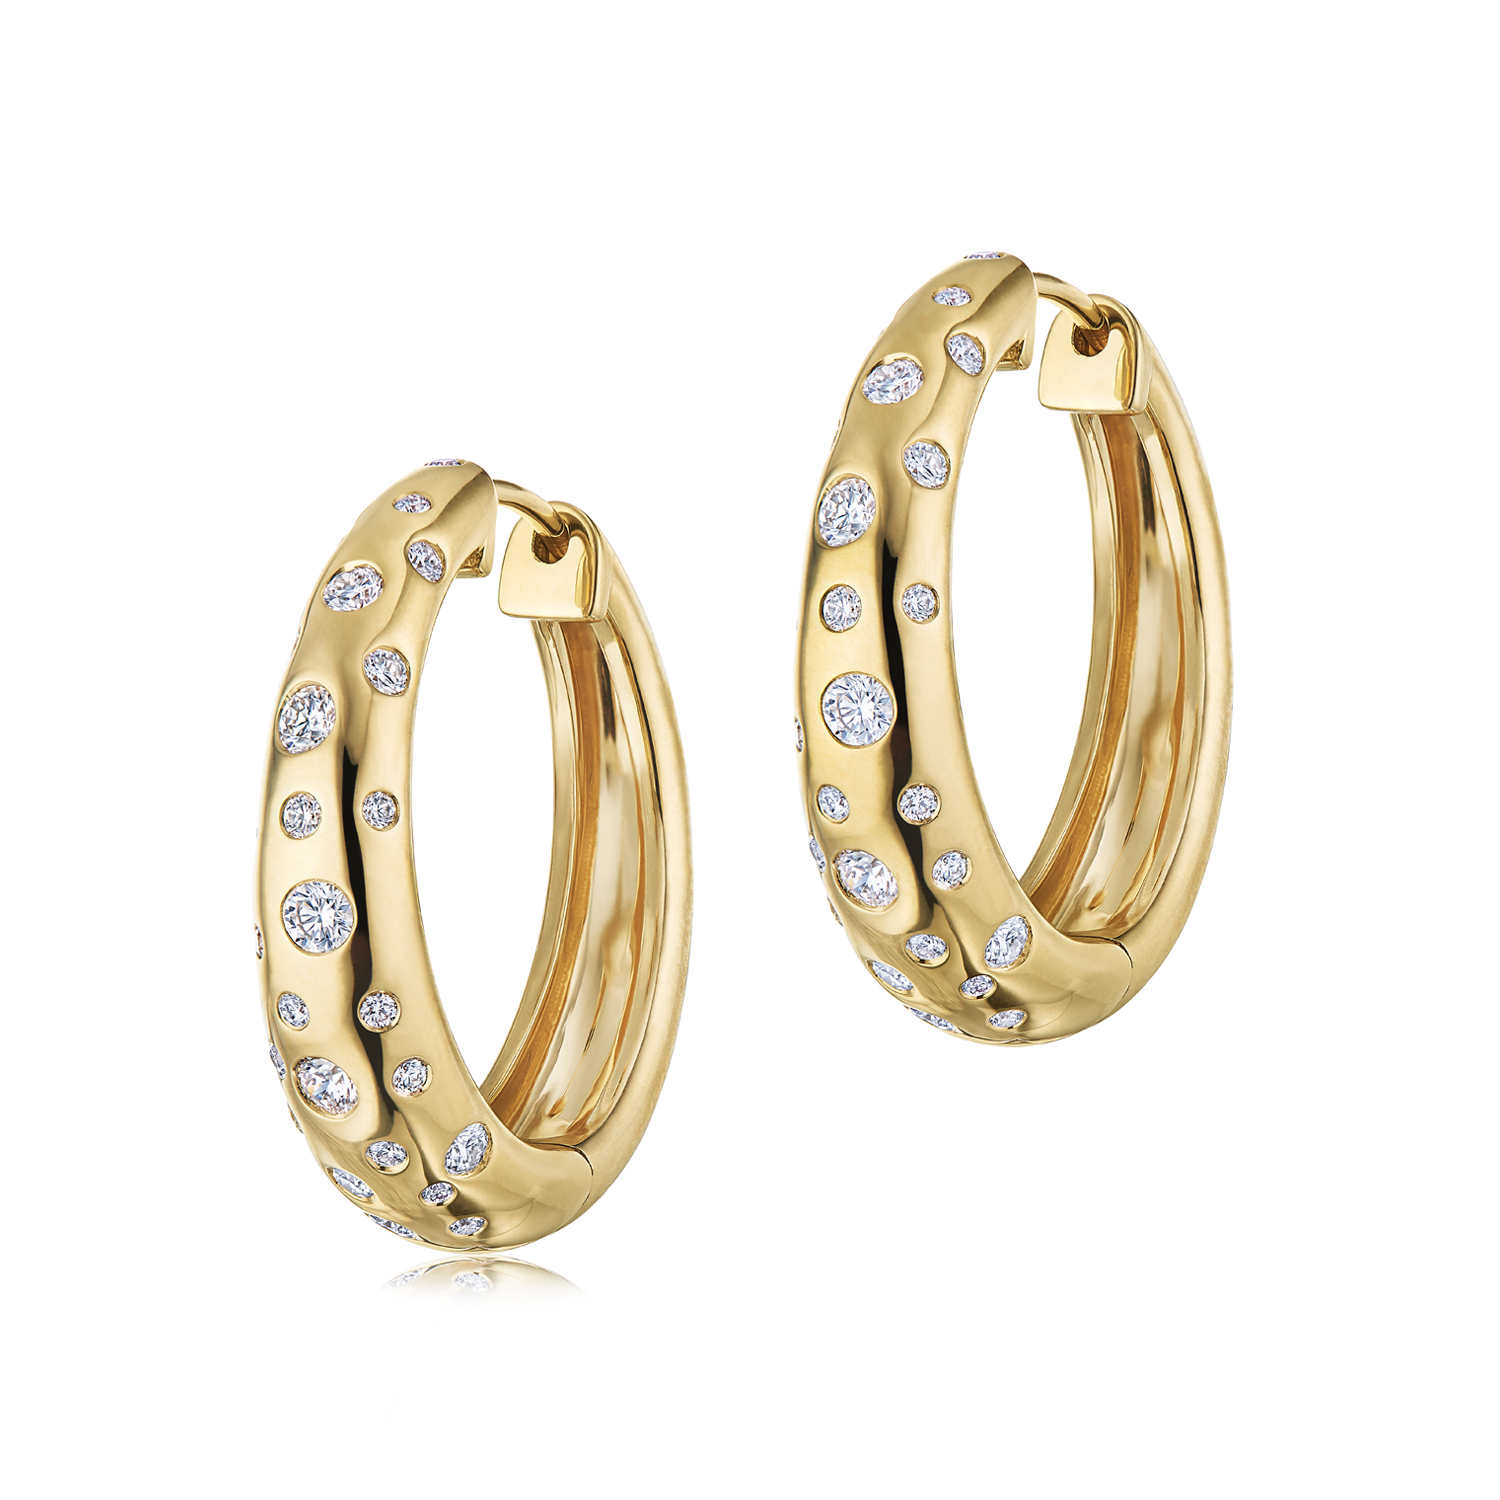 Buy Silver and Gold Stainless Steel White CZ Huggie Hoop Earrings Online -  Inox Jewelry India